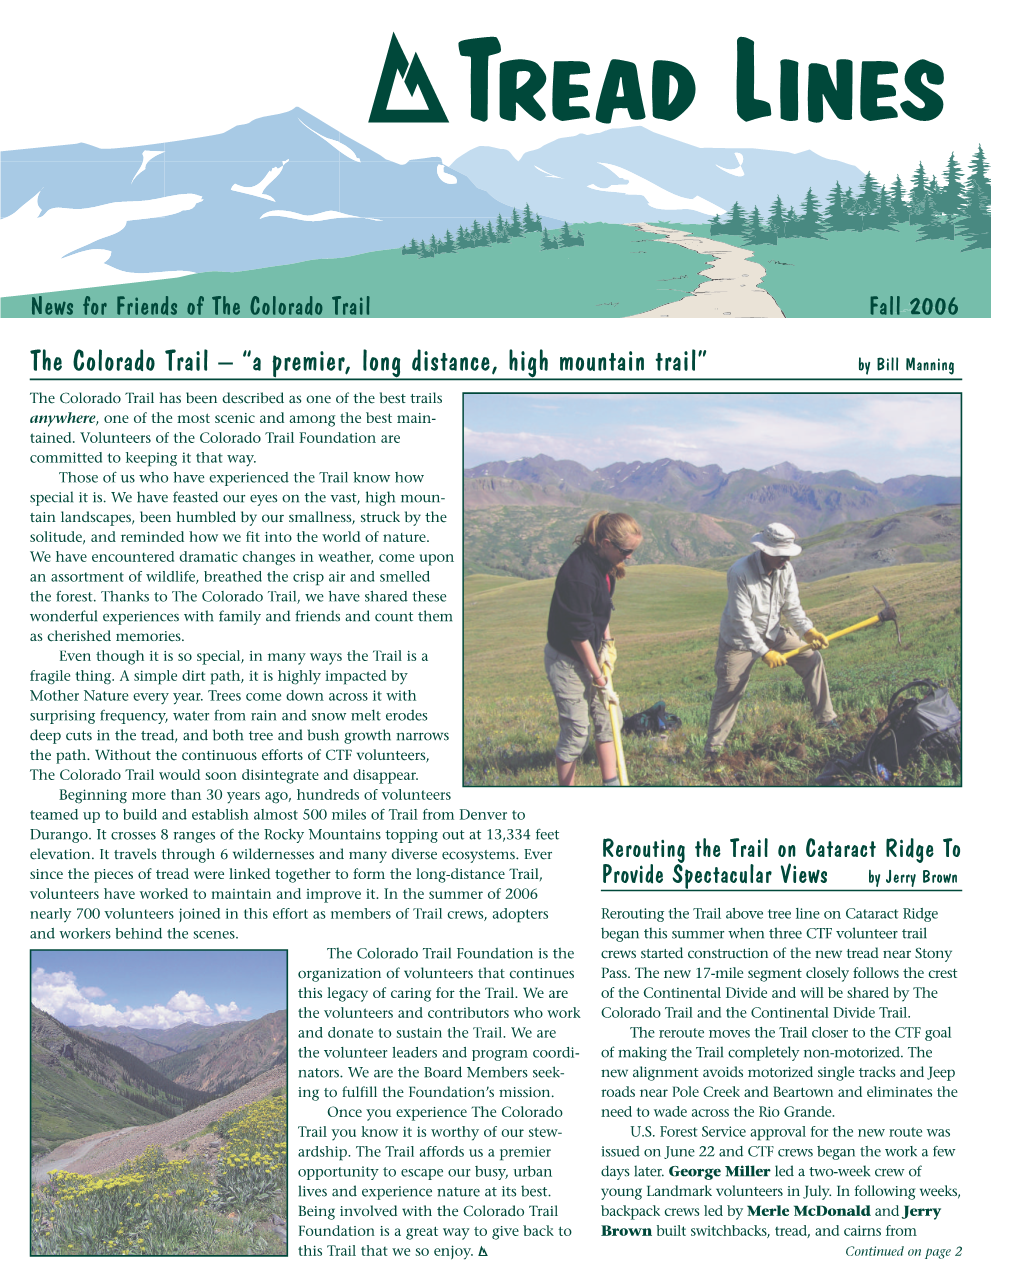 The Colorado Trail – “A Premier, Long Distance, High Mountain Trail”